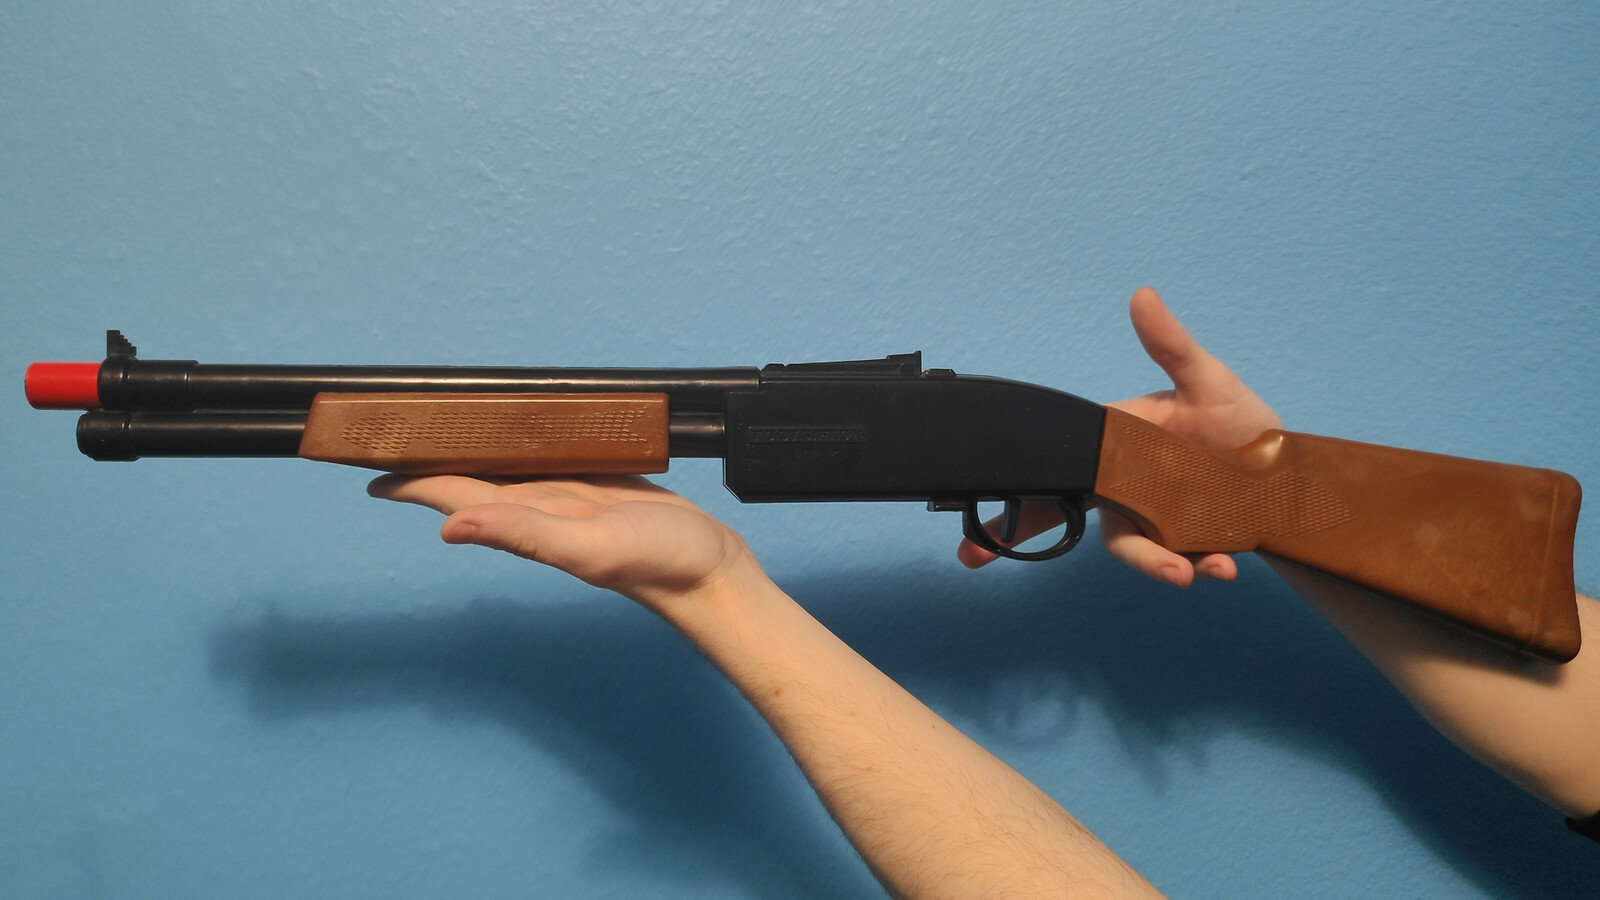 The original TootsieToy shotgun that I used to create the 3D model.